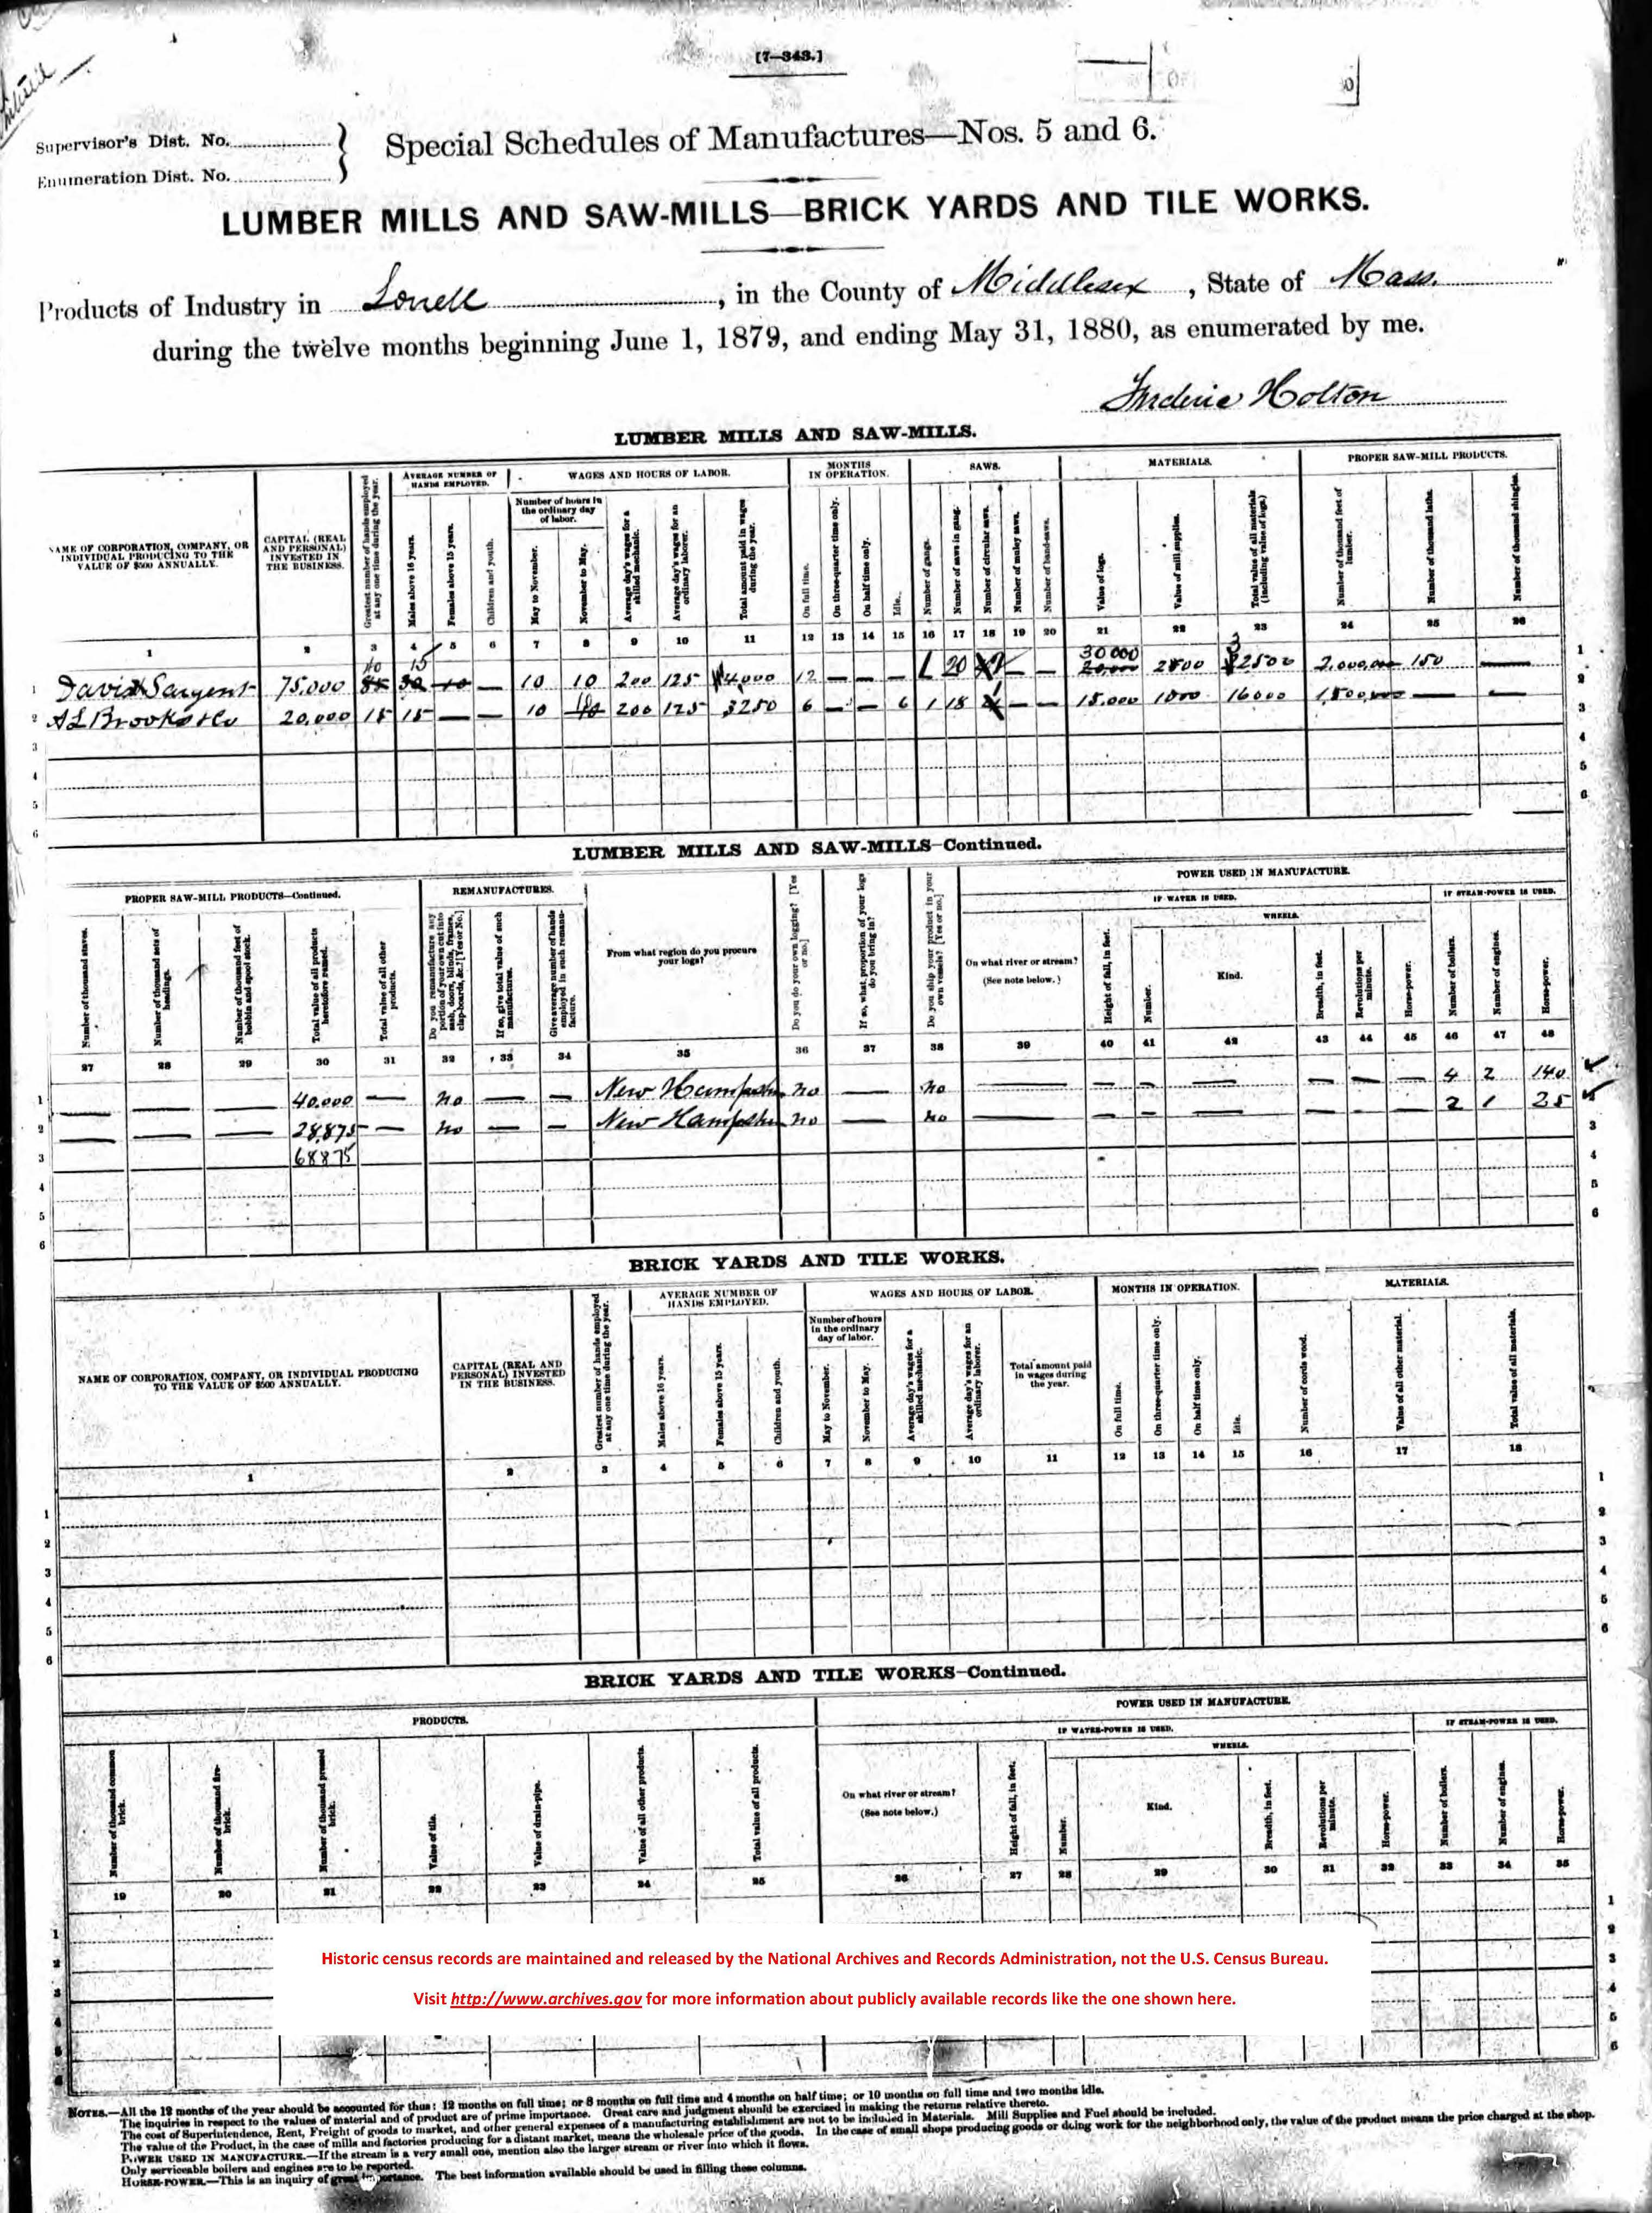 1880 manufacturing special schedule